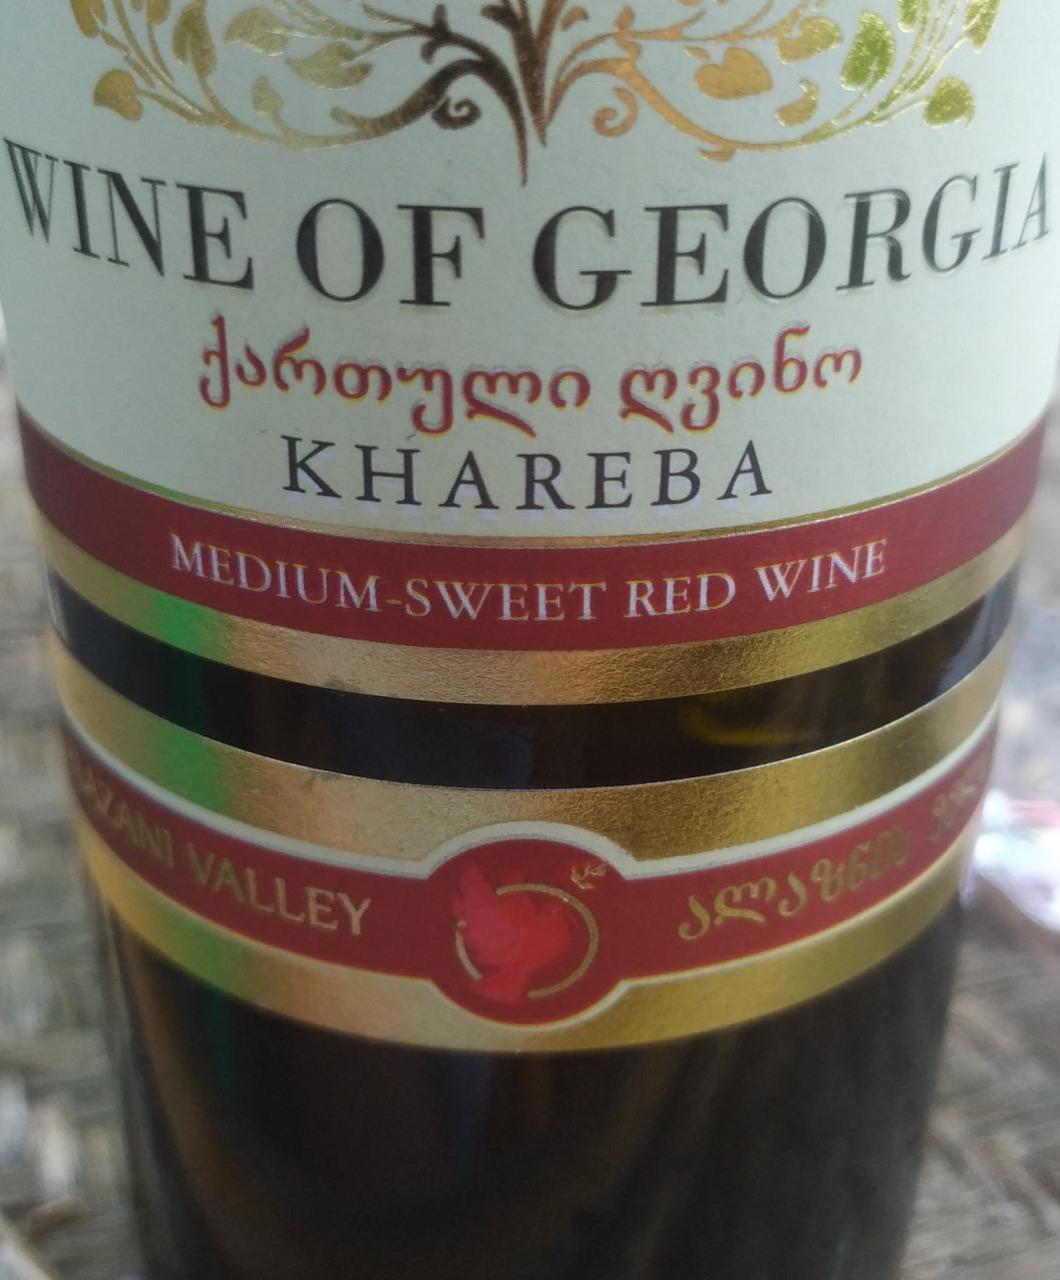 Zdjęcia - Wine of Georgia Khareba medium sweet red wine